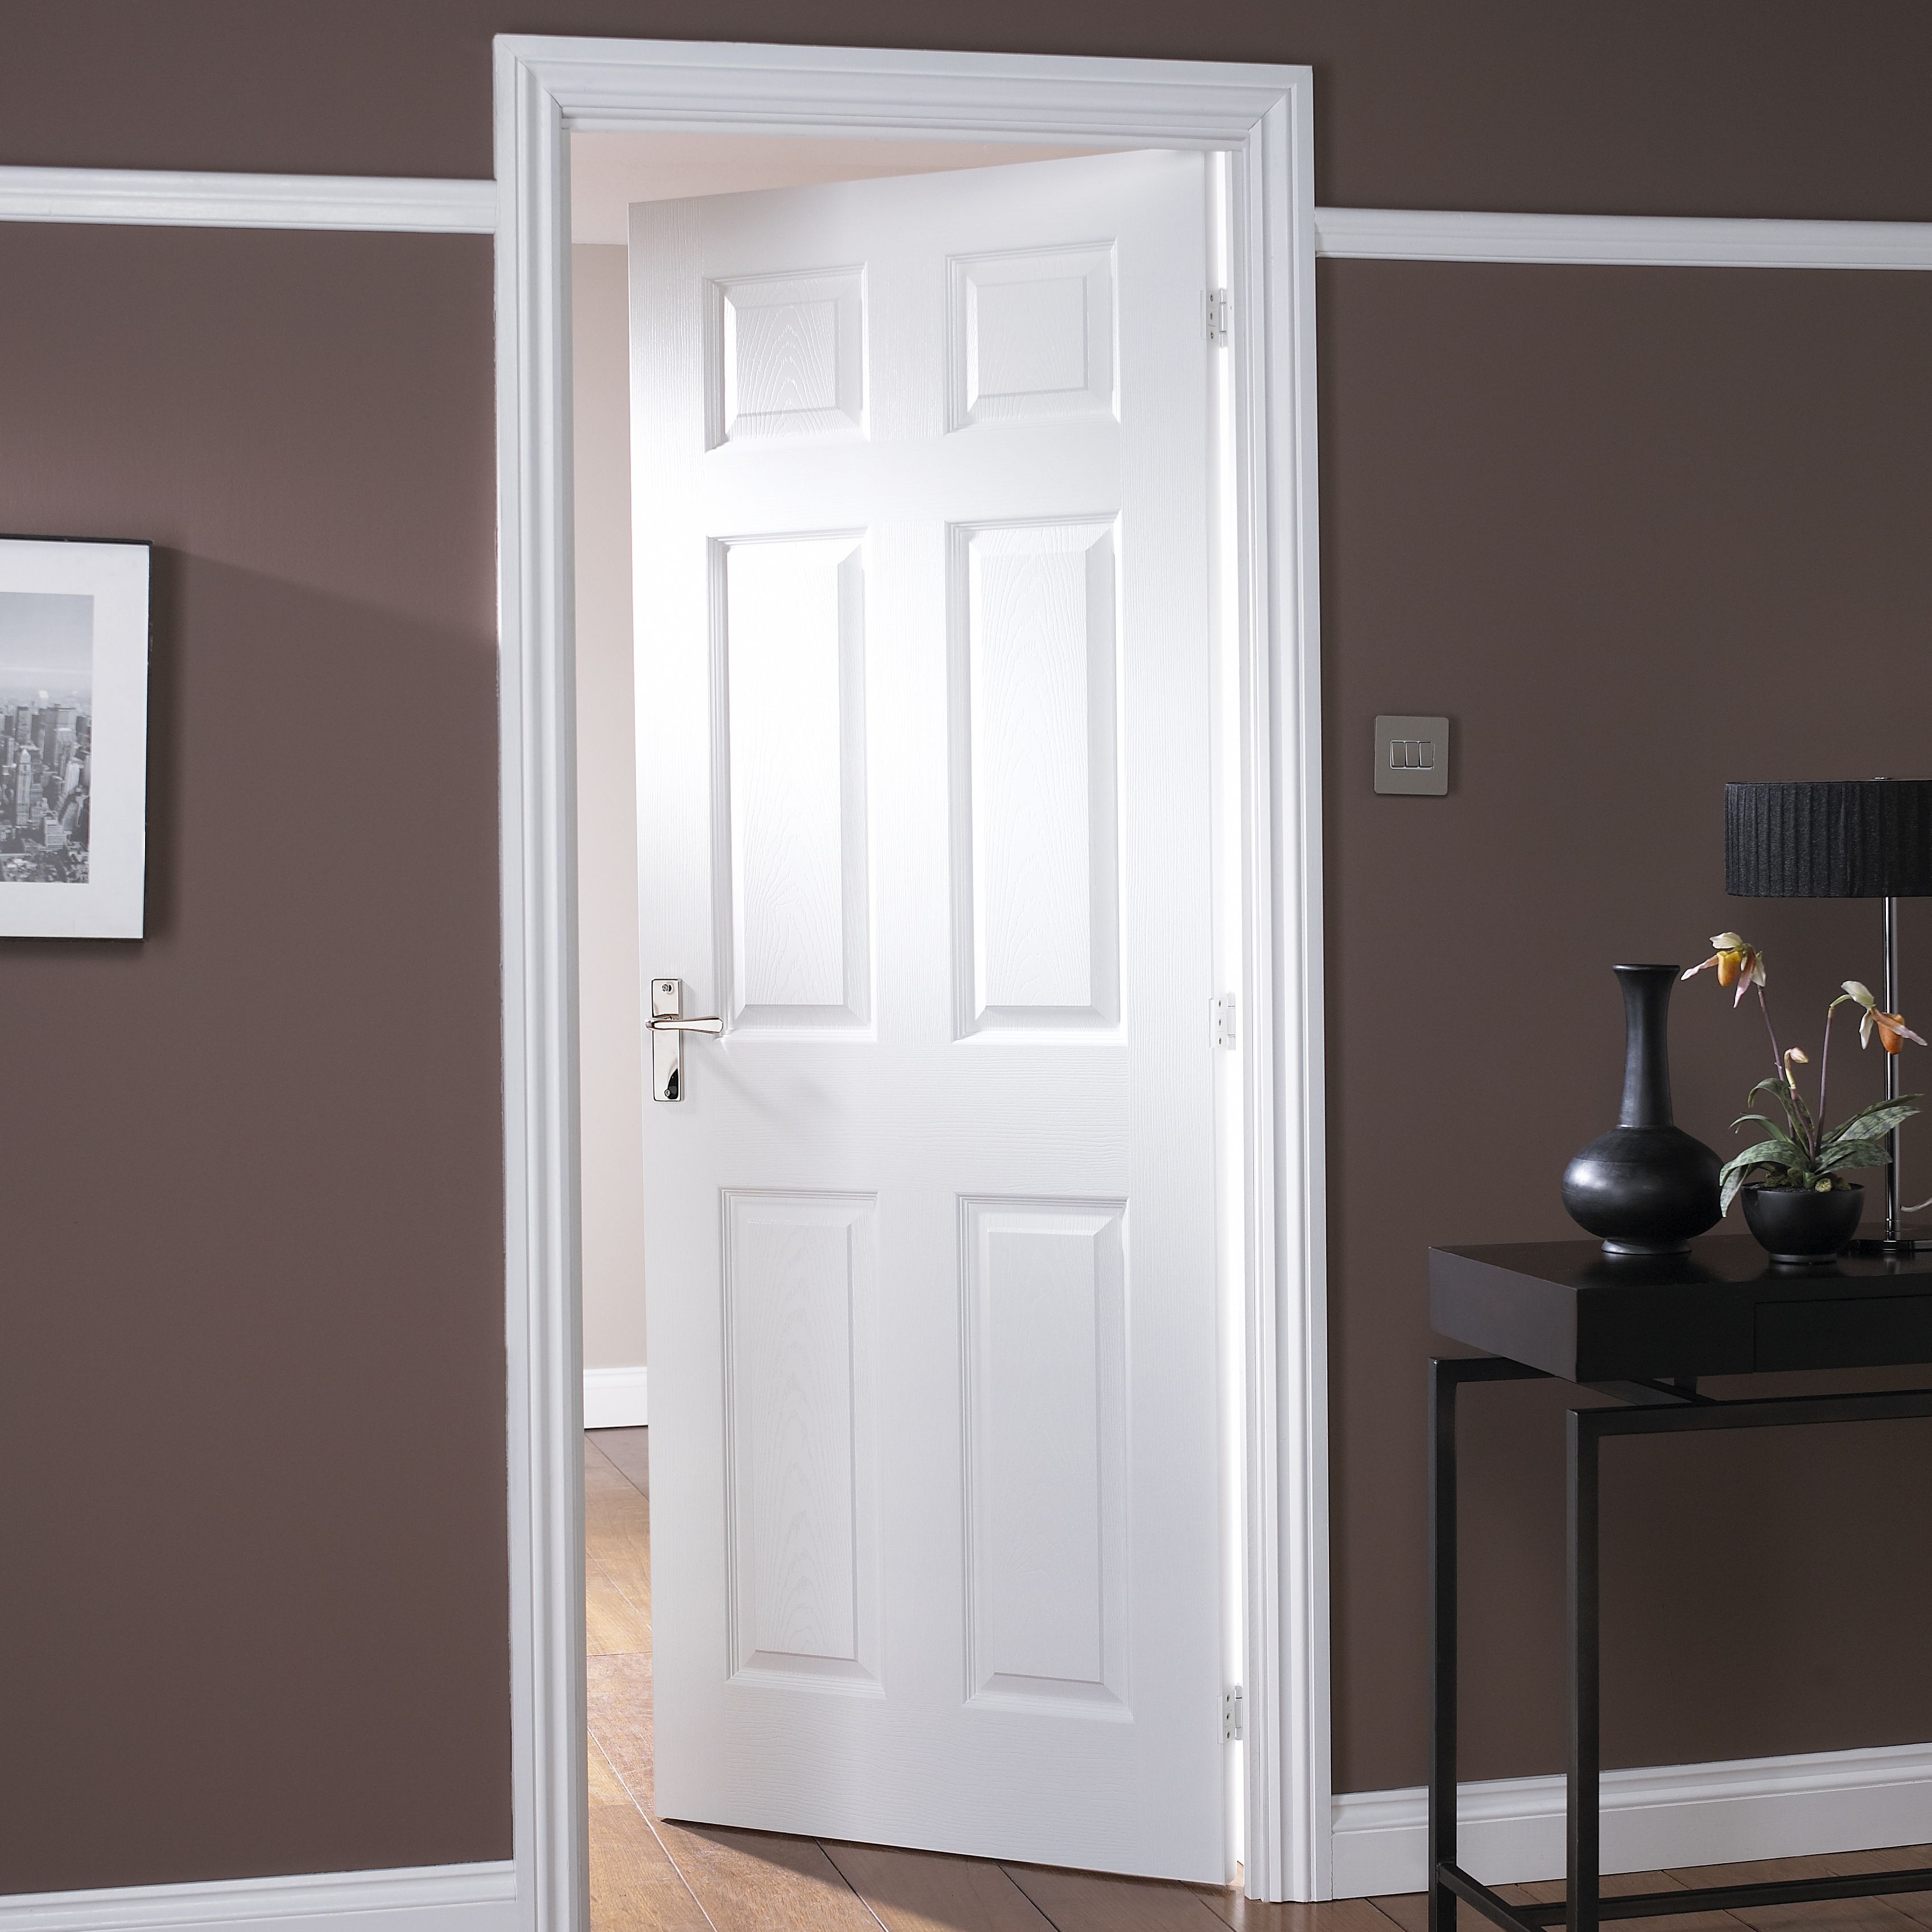 6 panel Unglazed White Woodgrain effect Internal Fire door, (H)1981mm (W)762mm (T)35mm